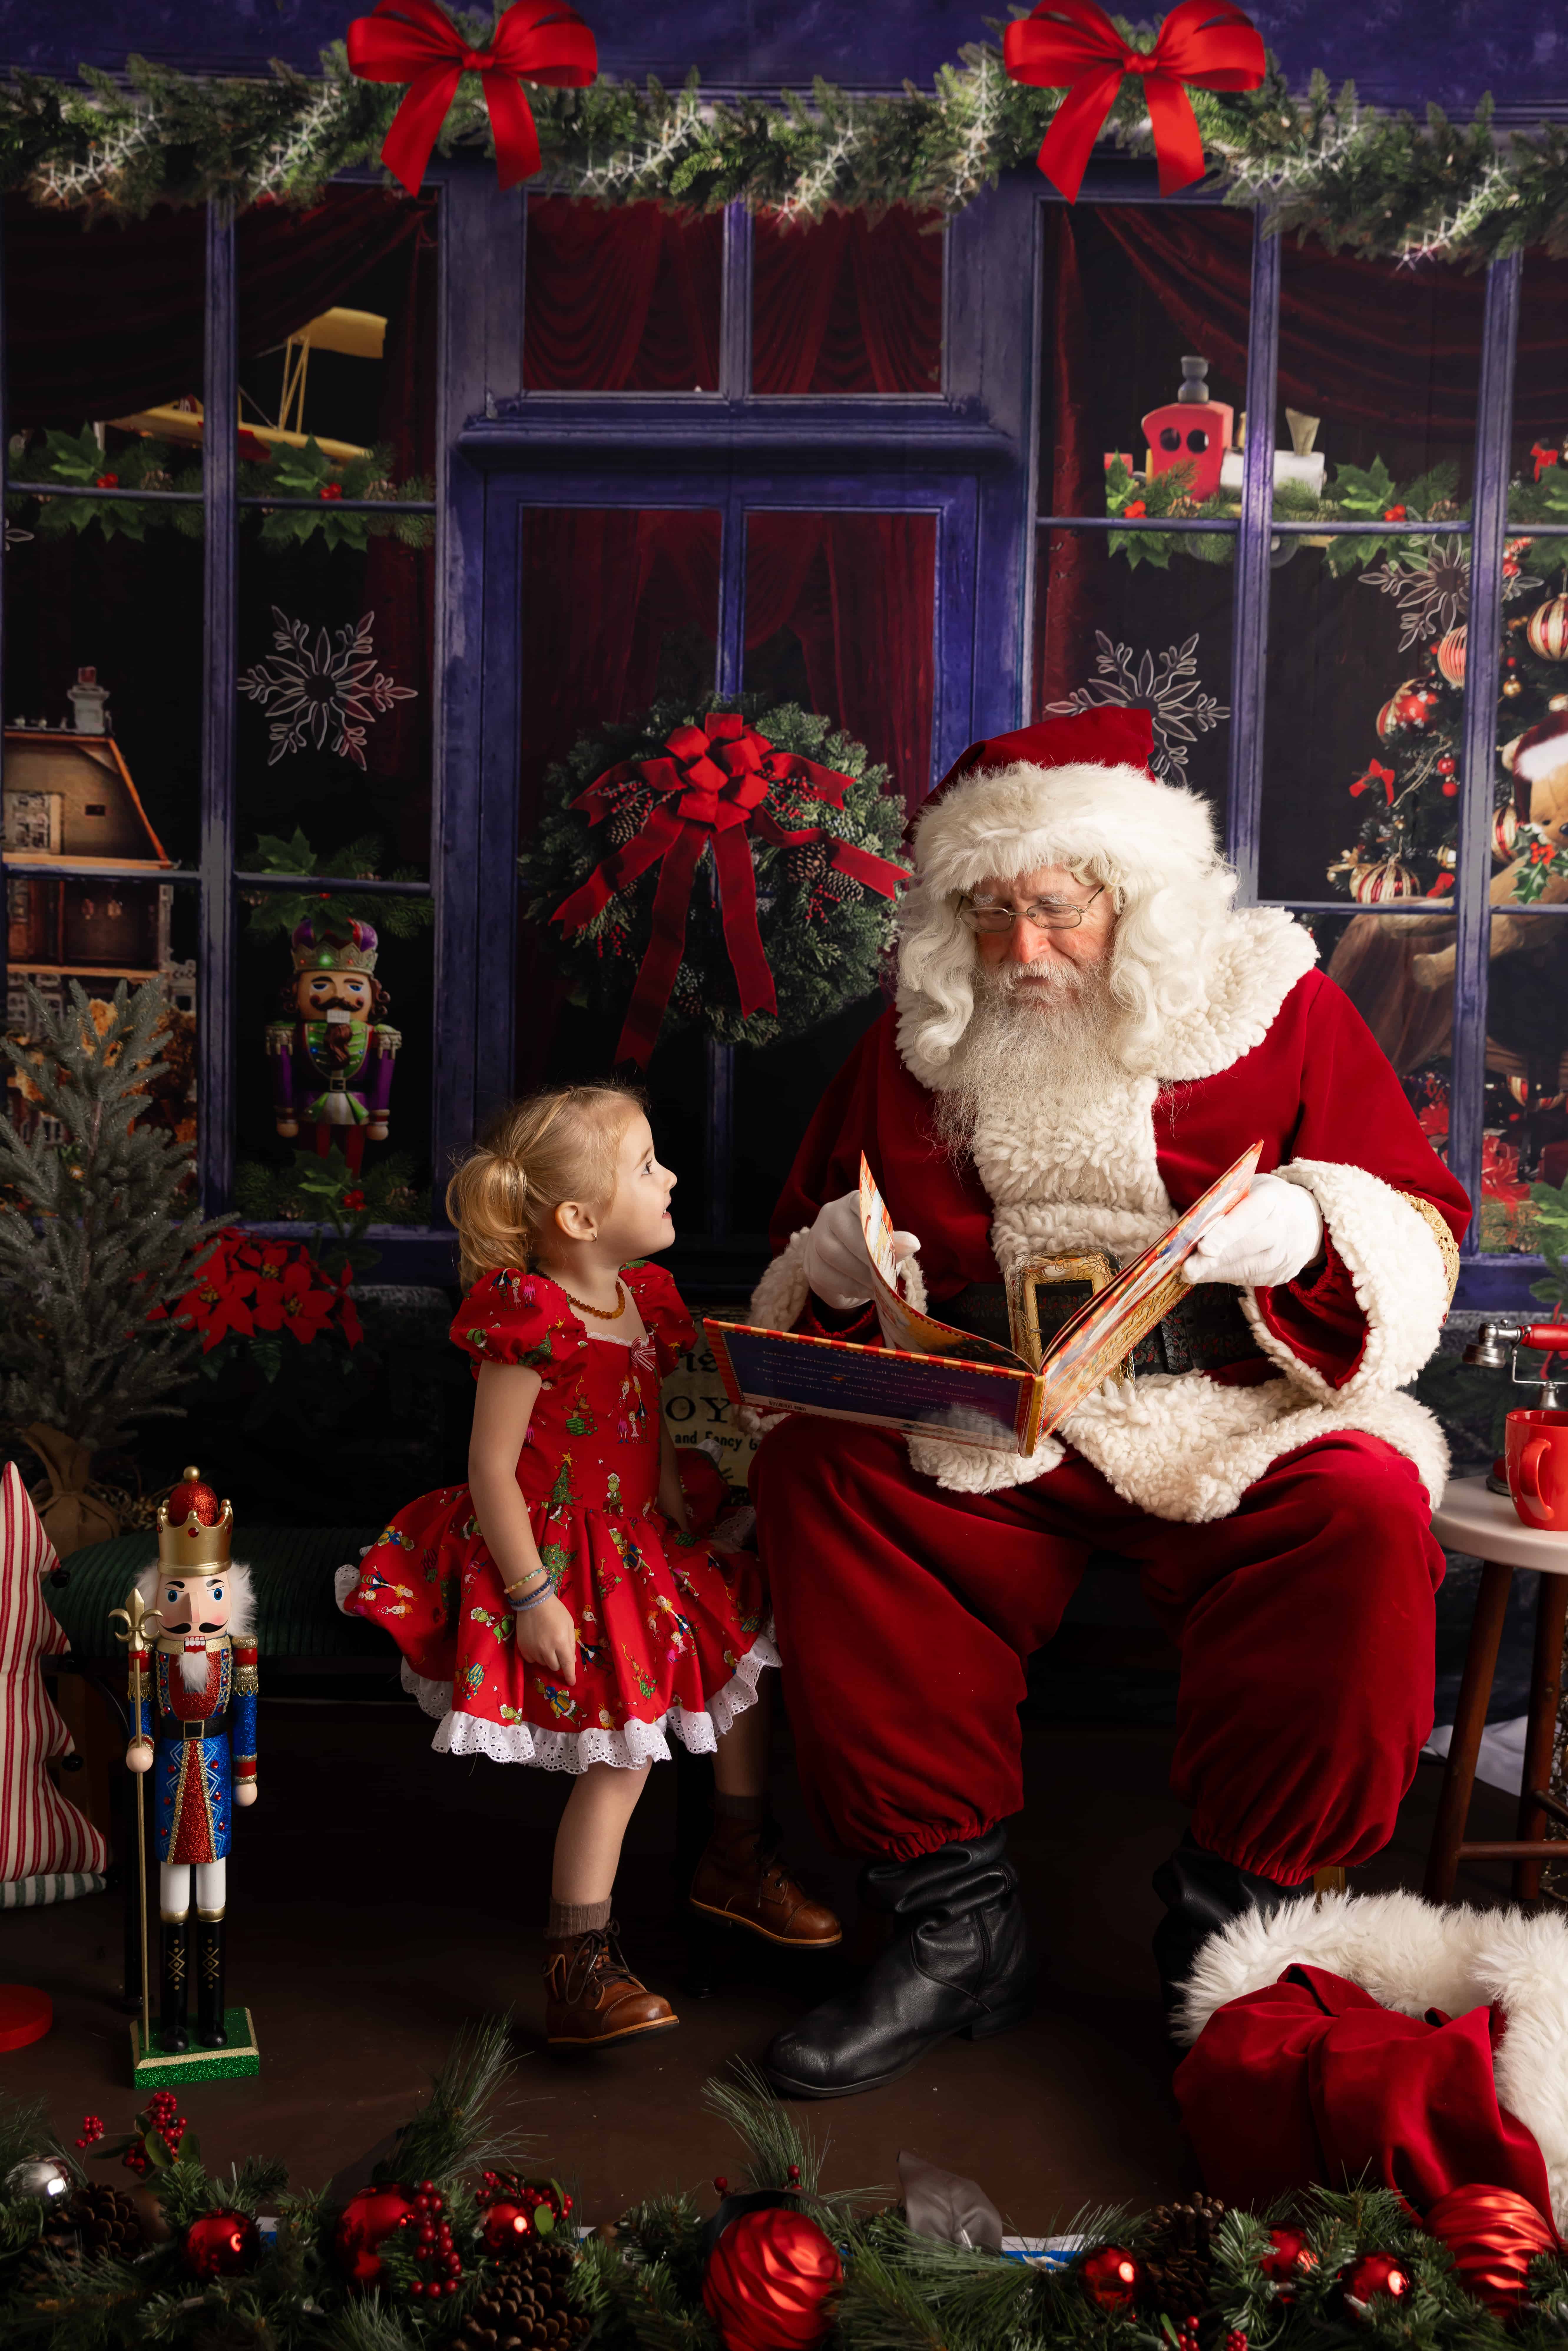 Santa and kid interactive photoshoot